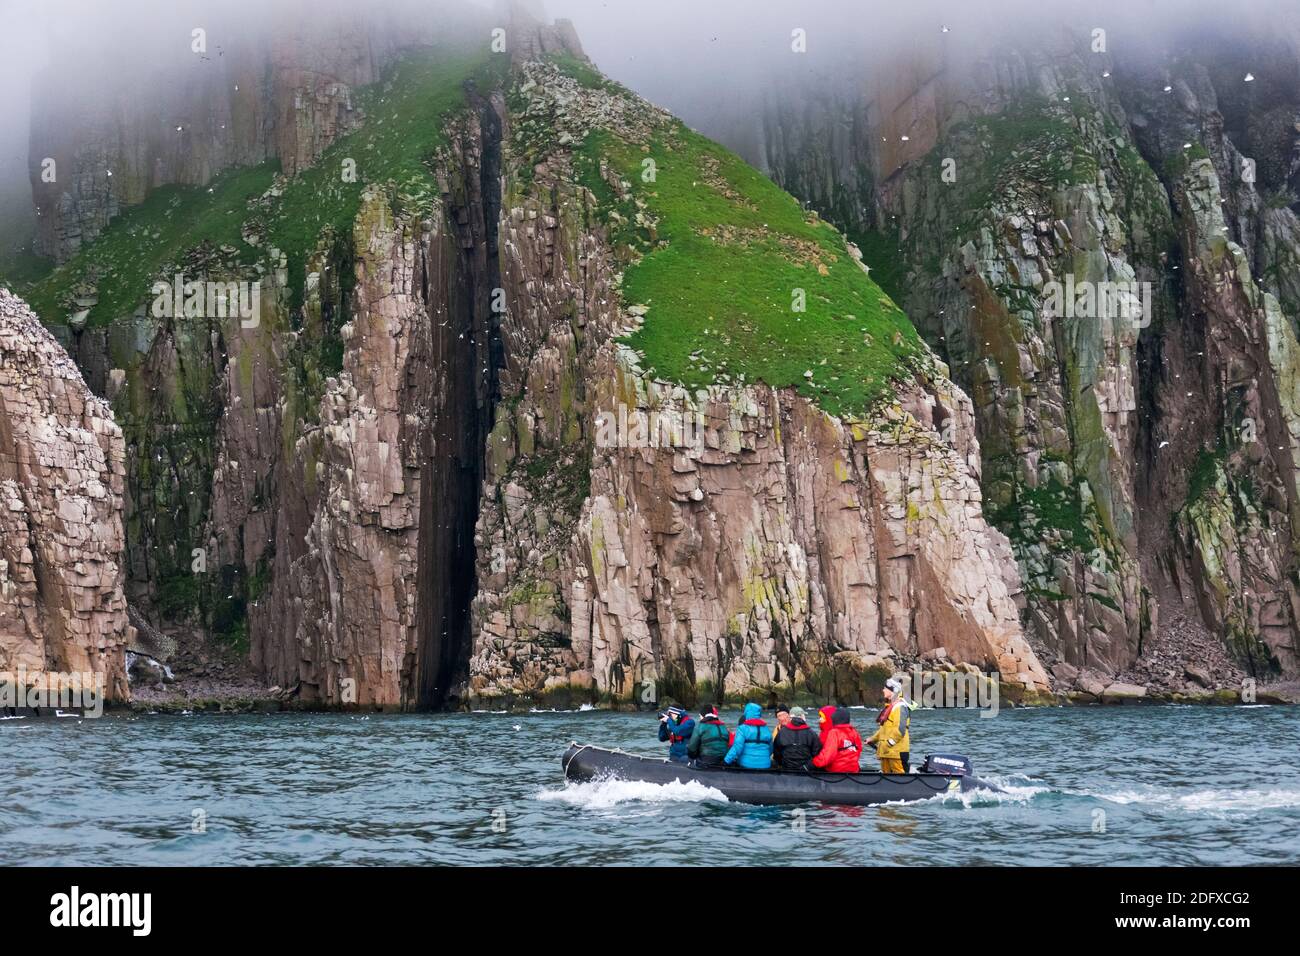 Tourists on zodiac reaching the island, Cape Archen, Bering Sea, Russian Far East Stock Photo